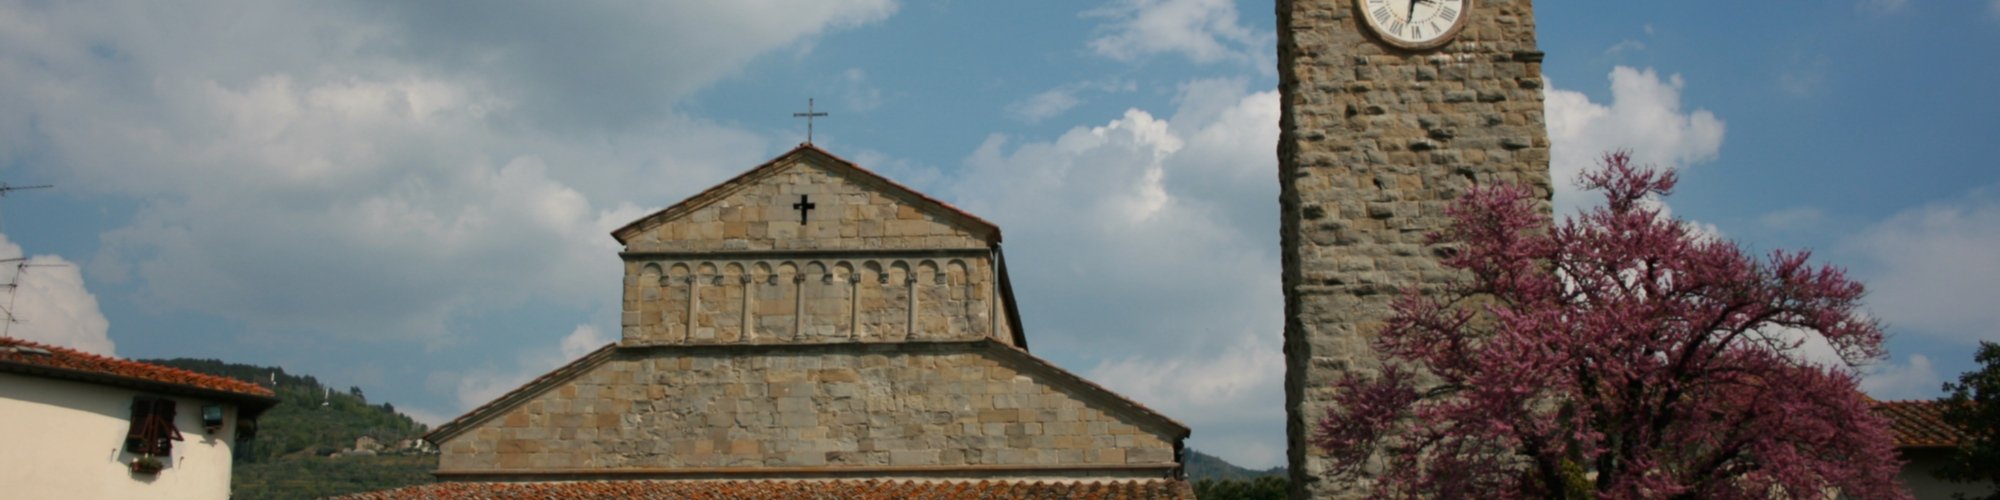 Pieve di San Pietro (parish church of St. Peter) in Cascia, Reggello